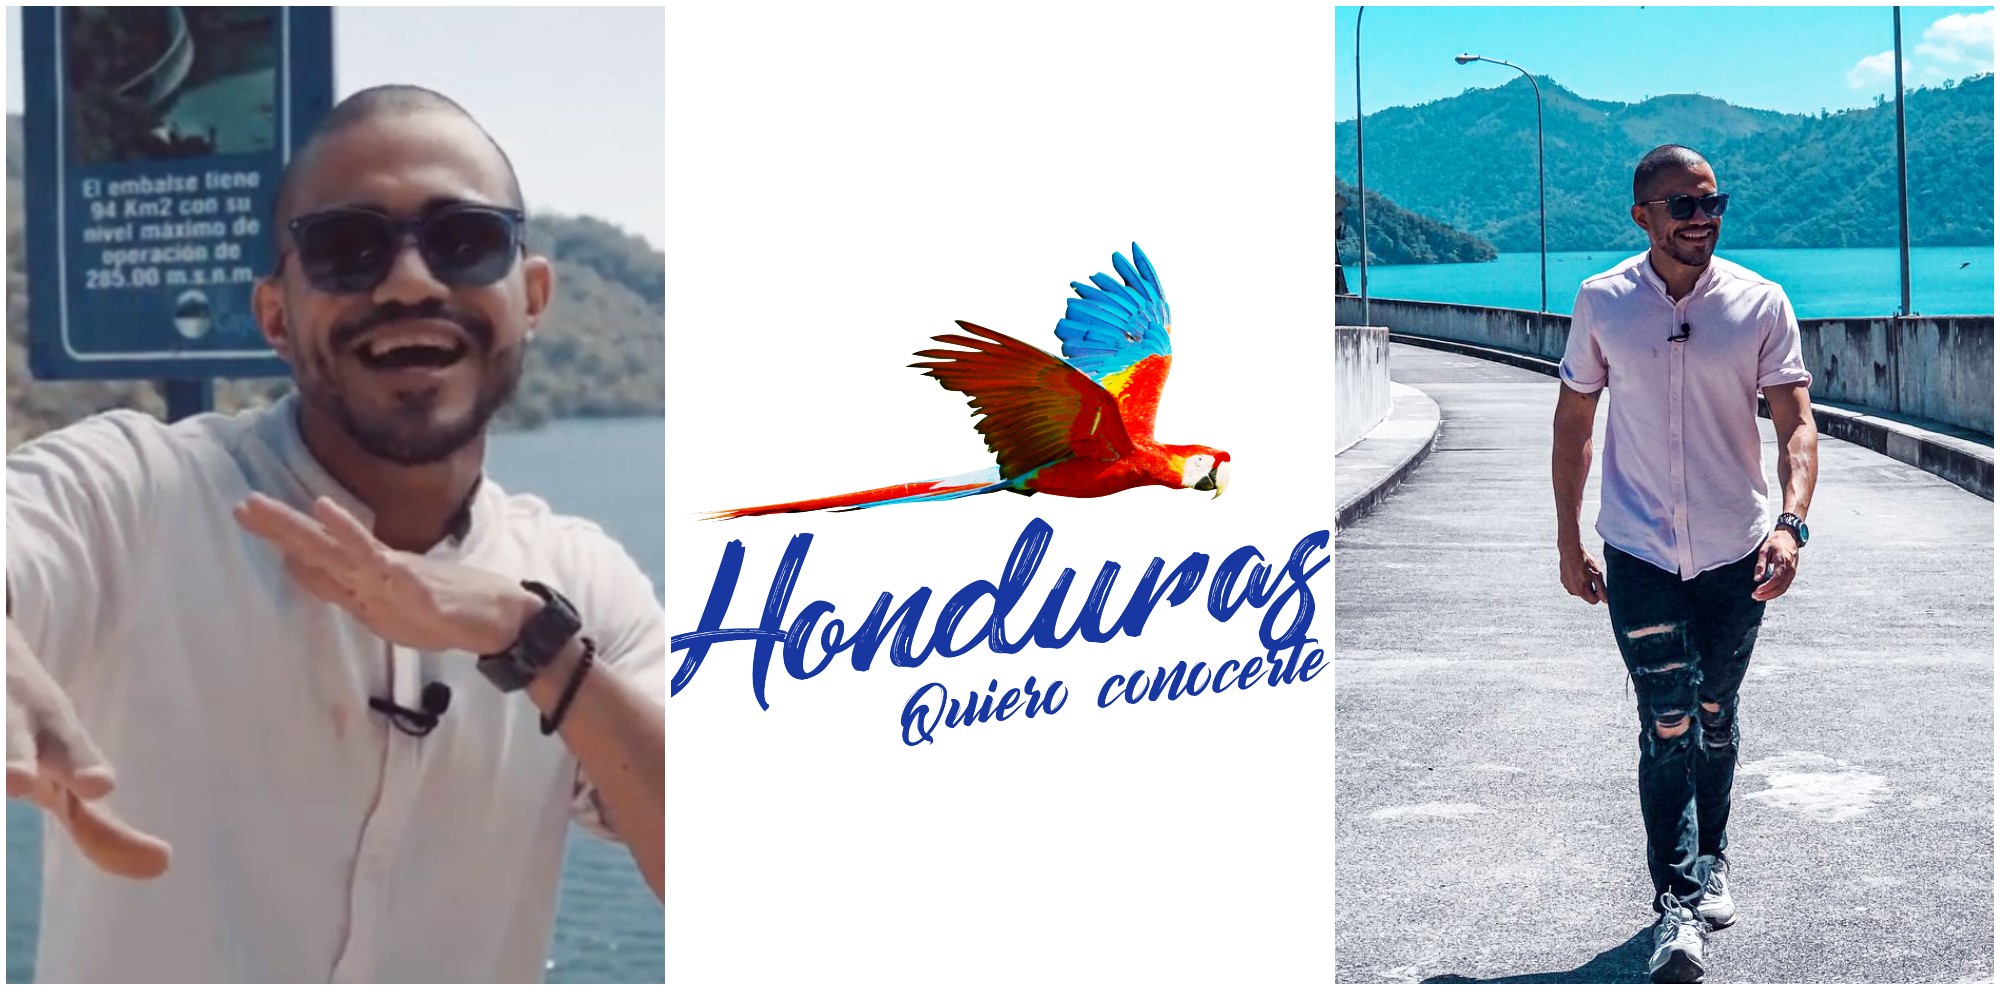 Hondureño crea vlog de YouTube ¡Honduras quiero conocerte!